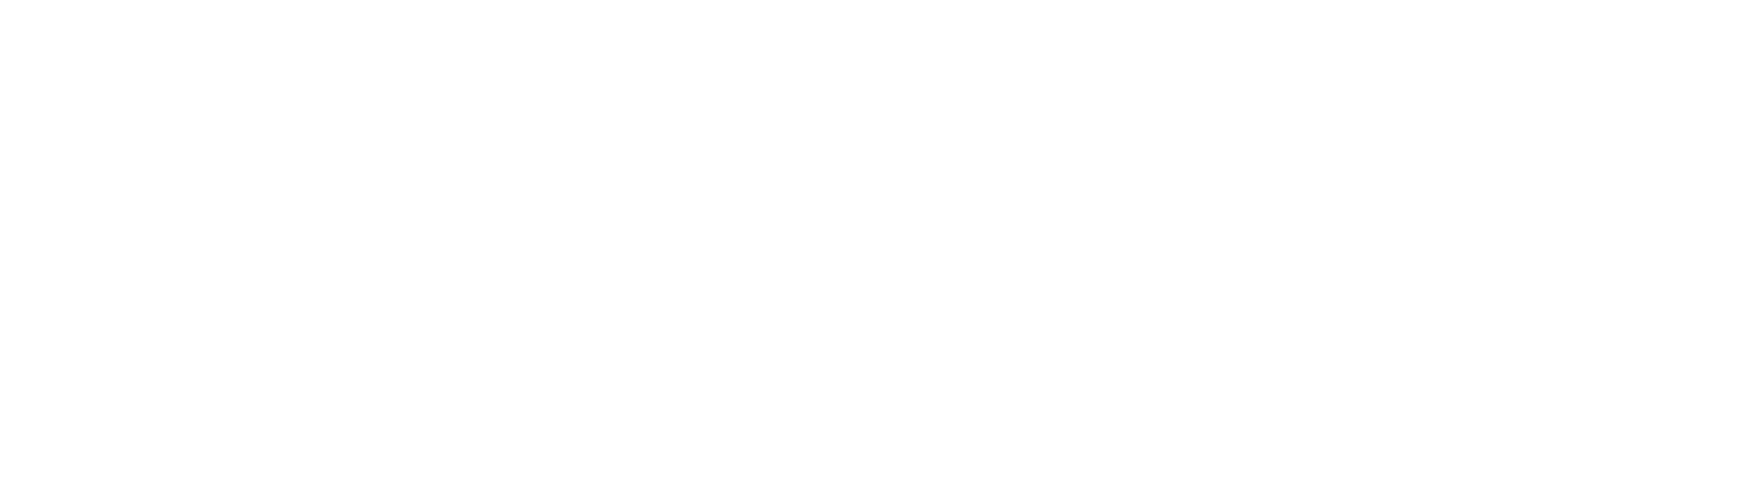 Thor Industries
 logo large for dark backgrounds (transparent PNG)